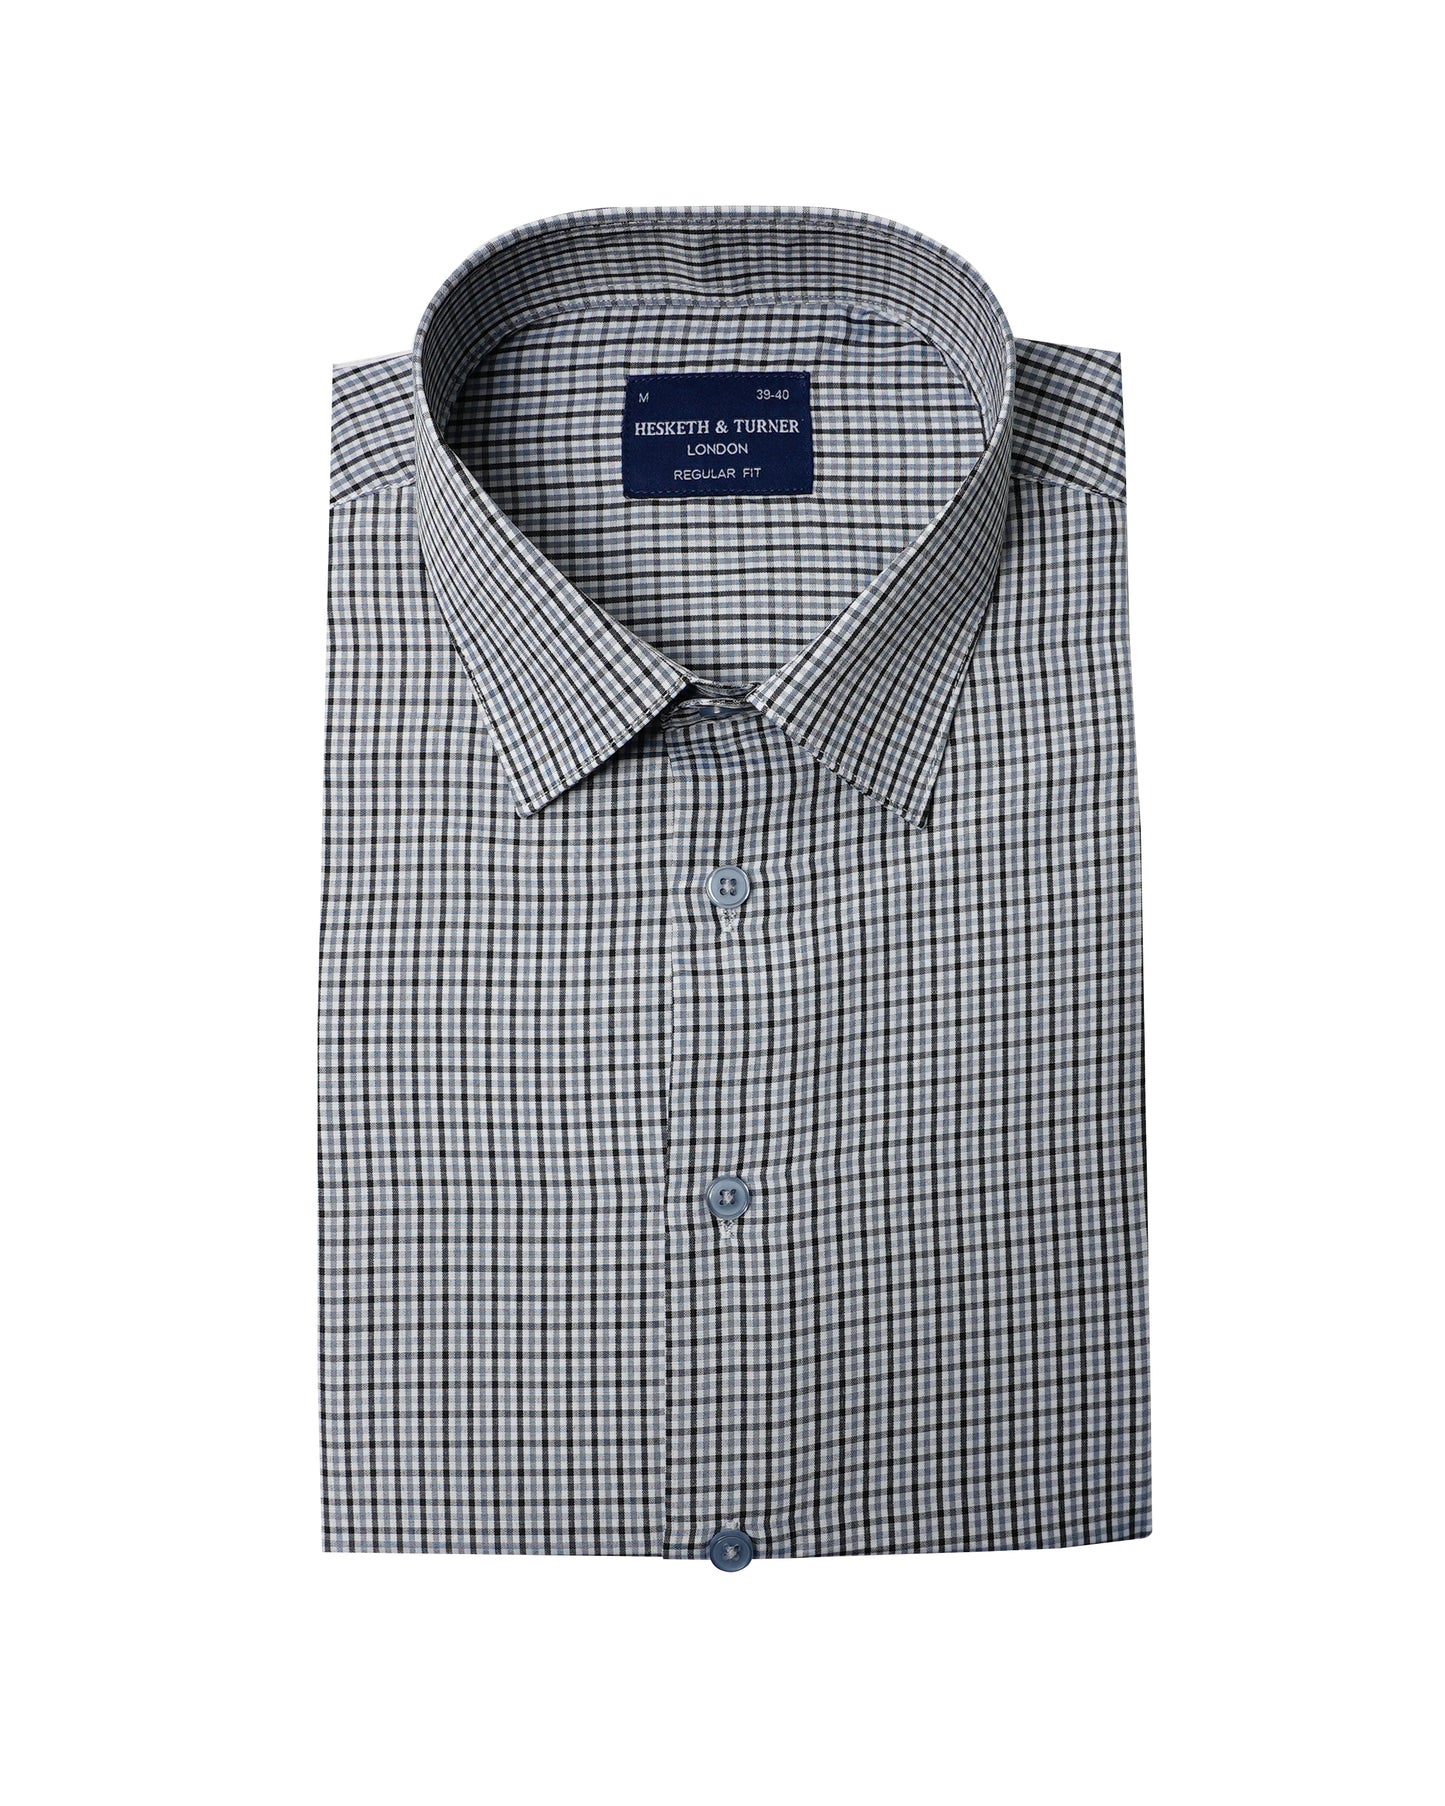 Black, Blue and White Short Sleeve Regular Fit Shirt (2283)